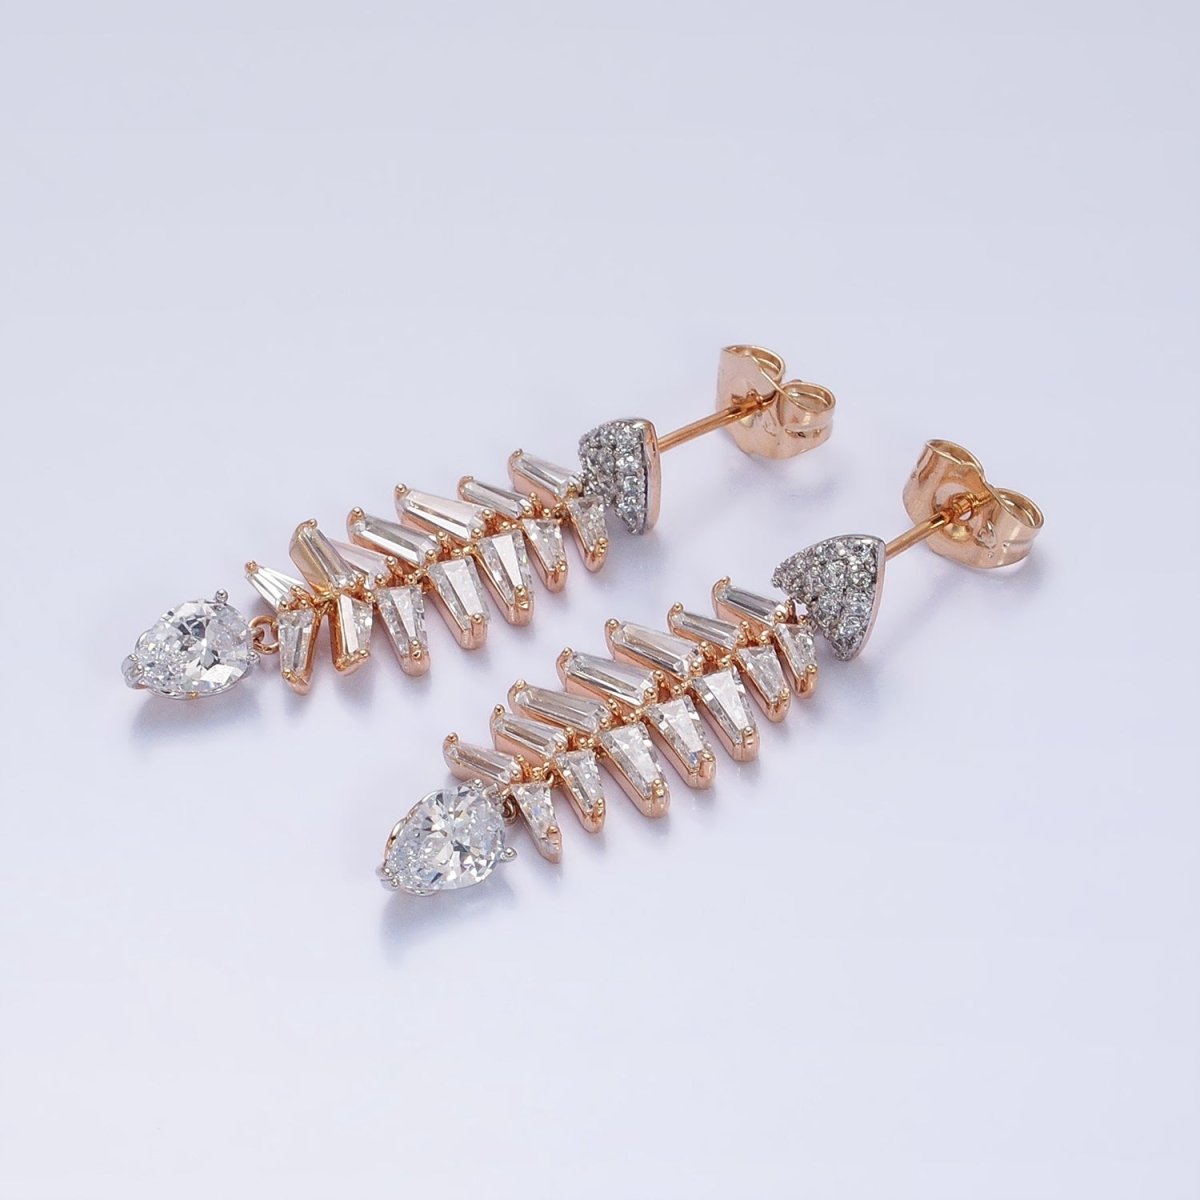 Fishbone Earrings, 18K Gold Filled Fish Bone Earrings, Pirate Fish Earrings CZ Stone AB800 - DLUXCA